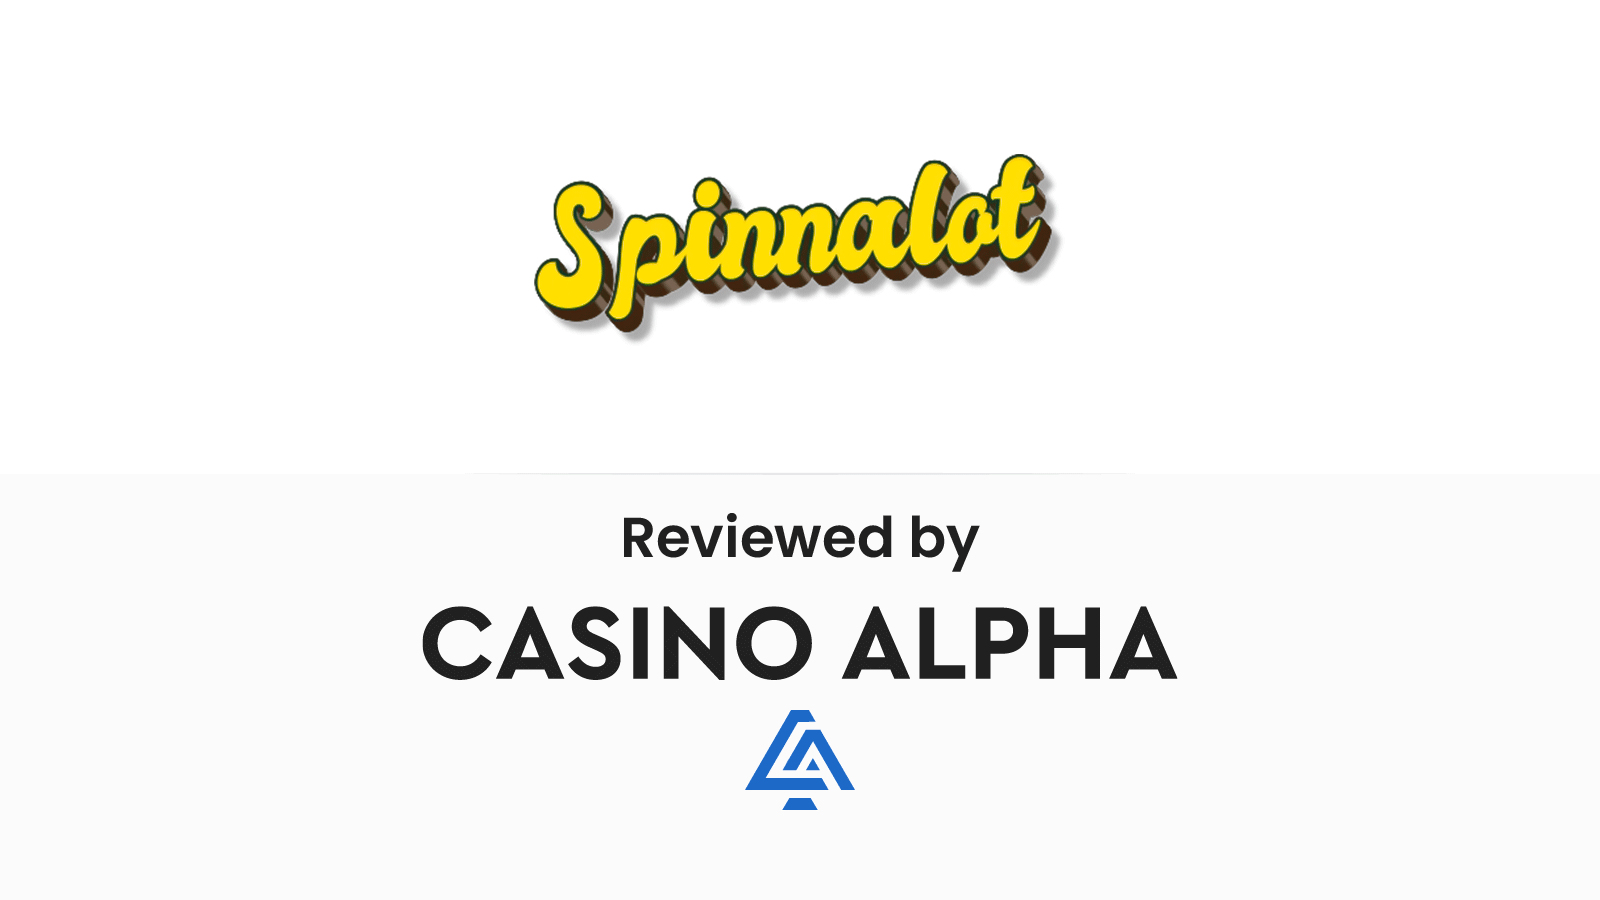 Spinnalot Casino Review & Promo codes